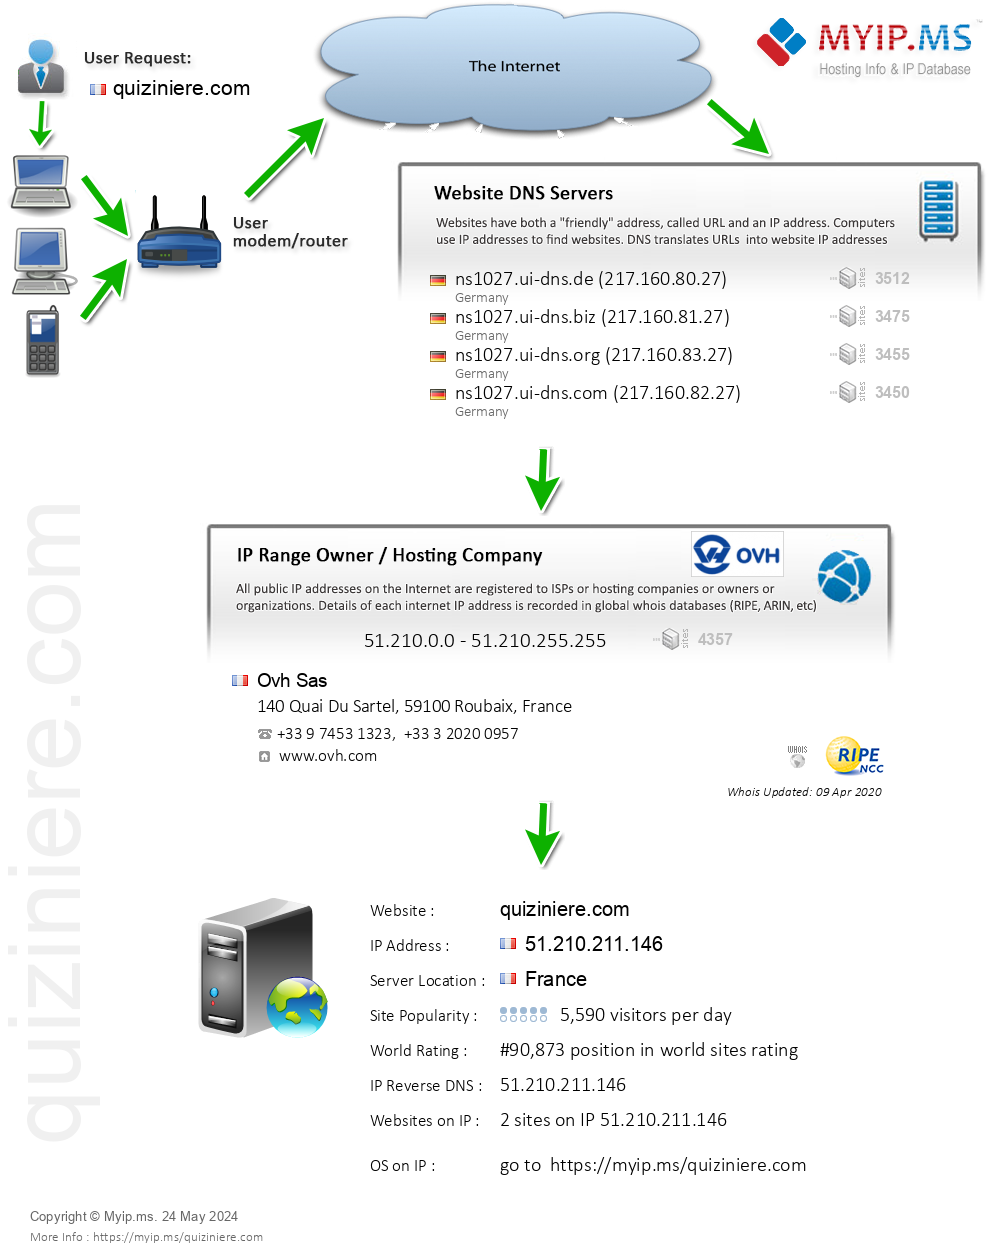 Quiziniere.com - Website Hosting Visual IP Diagram